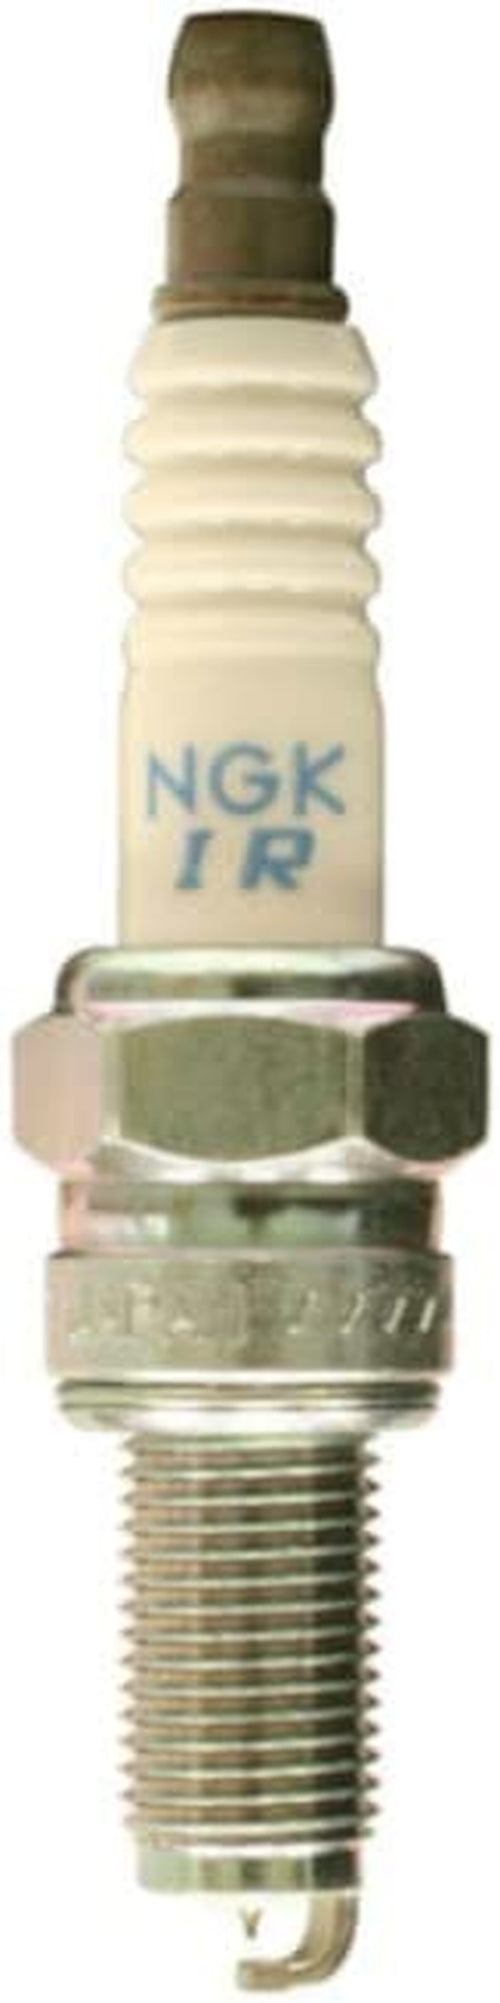 (4948) CR8EIB-10 Iridium IX Spark Plug, Pack of 1, One Size